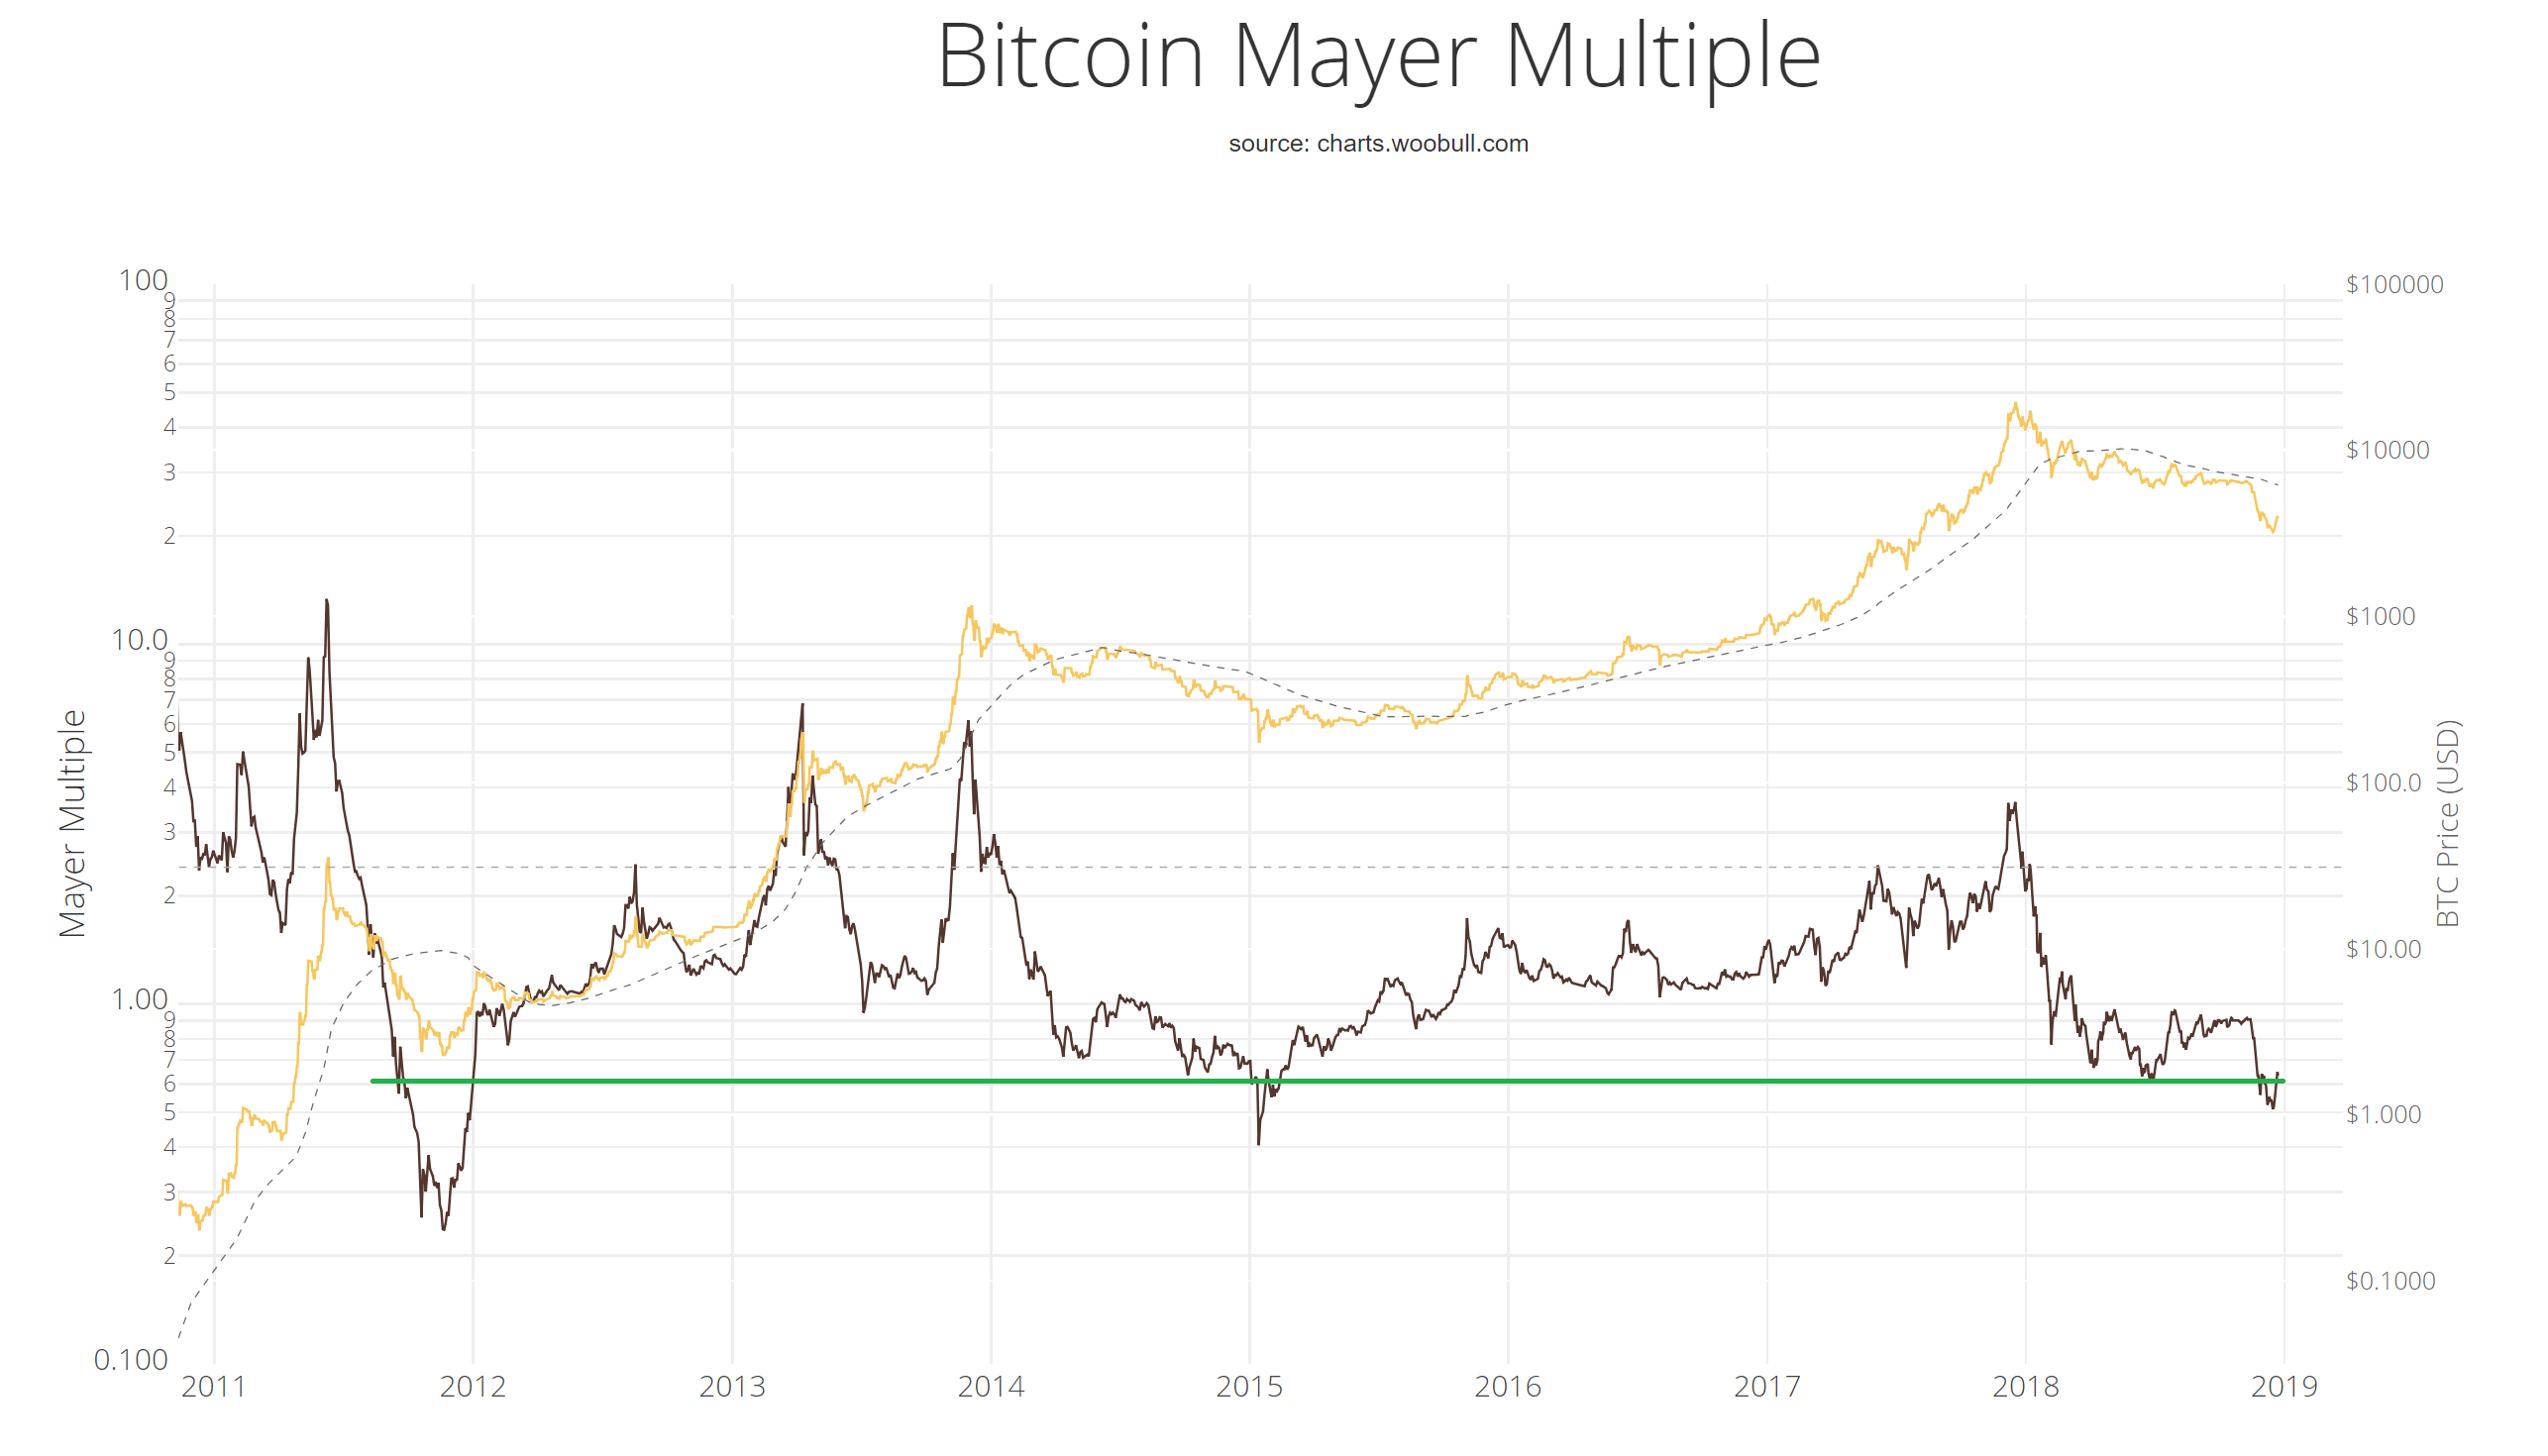 mayer multiple bitcoin